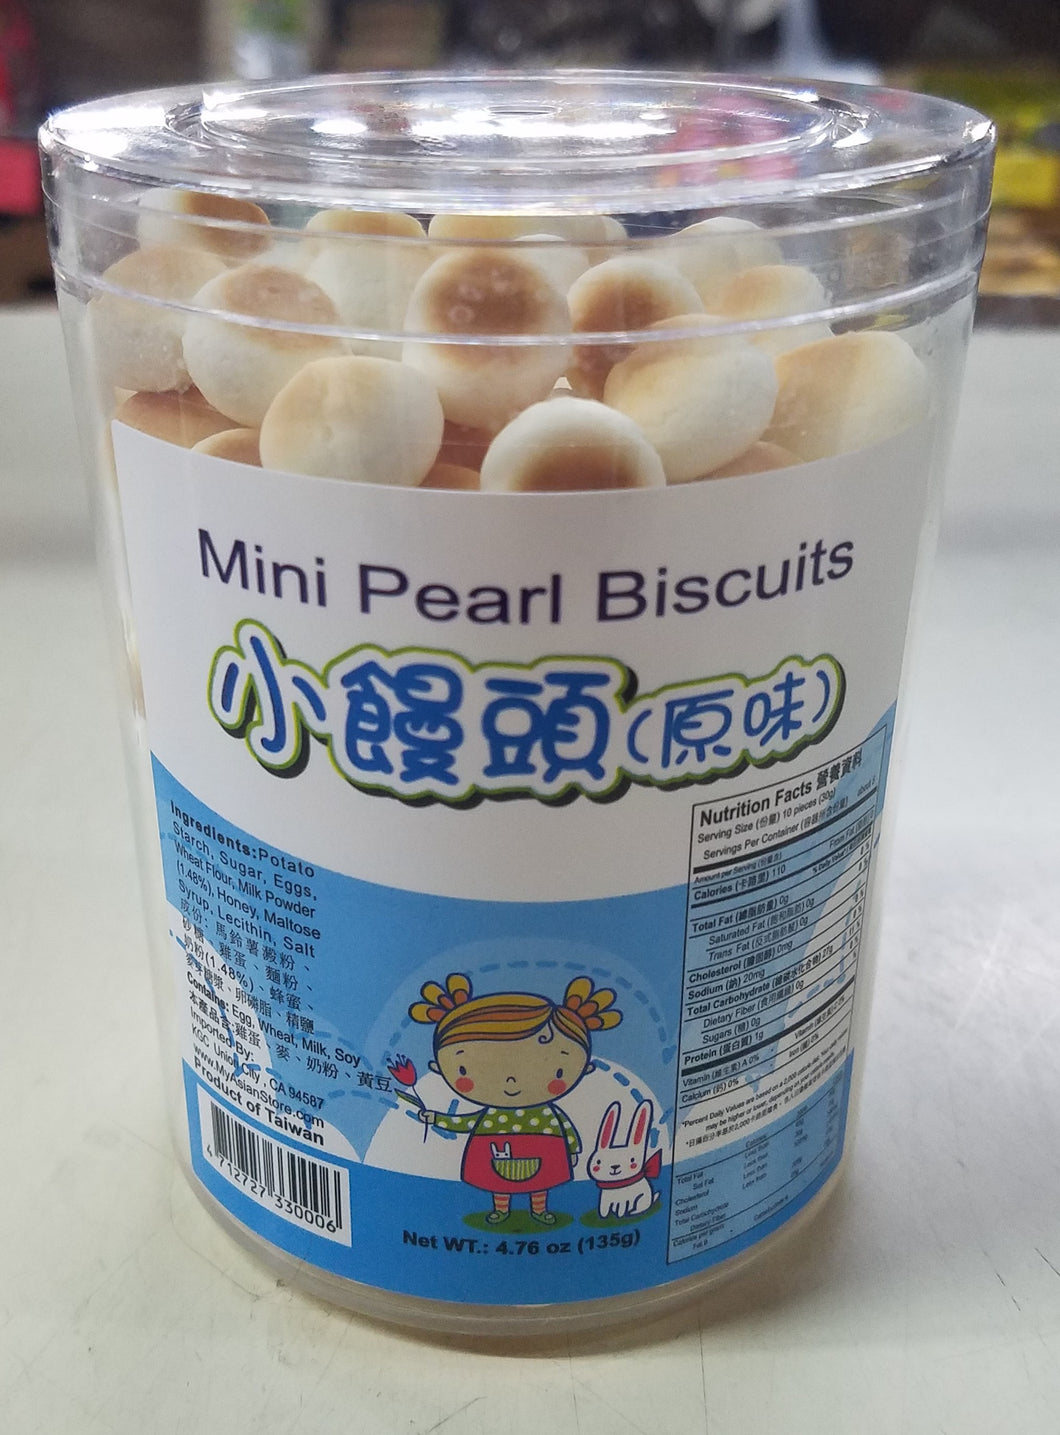 Mini Pearl Biscuits